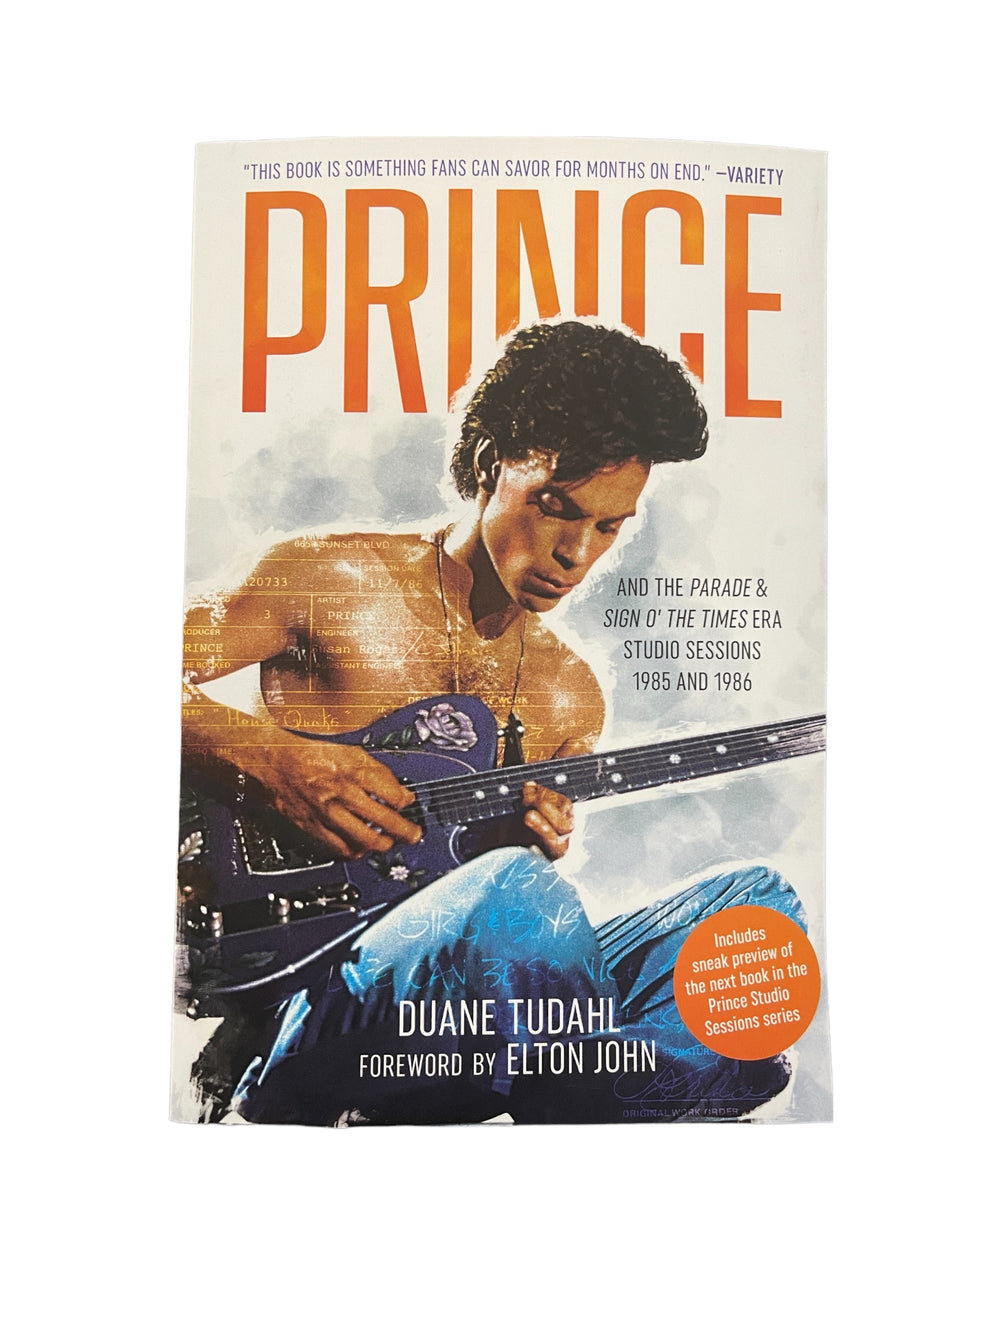 Prince – Parade & Sign "O" The Times Era Studio Sessions : 1985 & 86 by Duane Tudahl SB NEW:2022